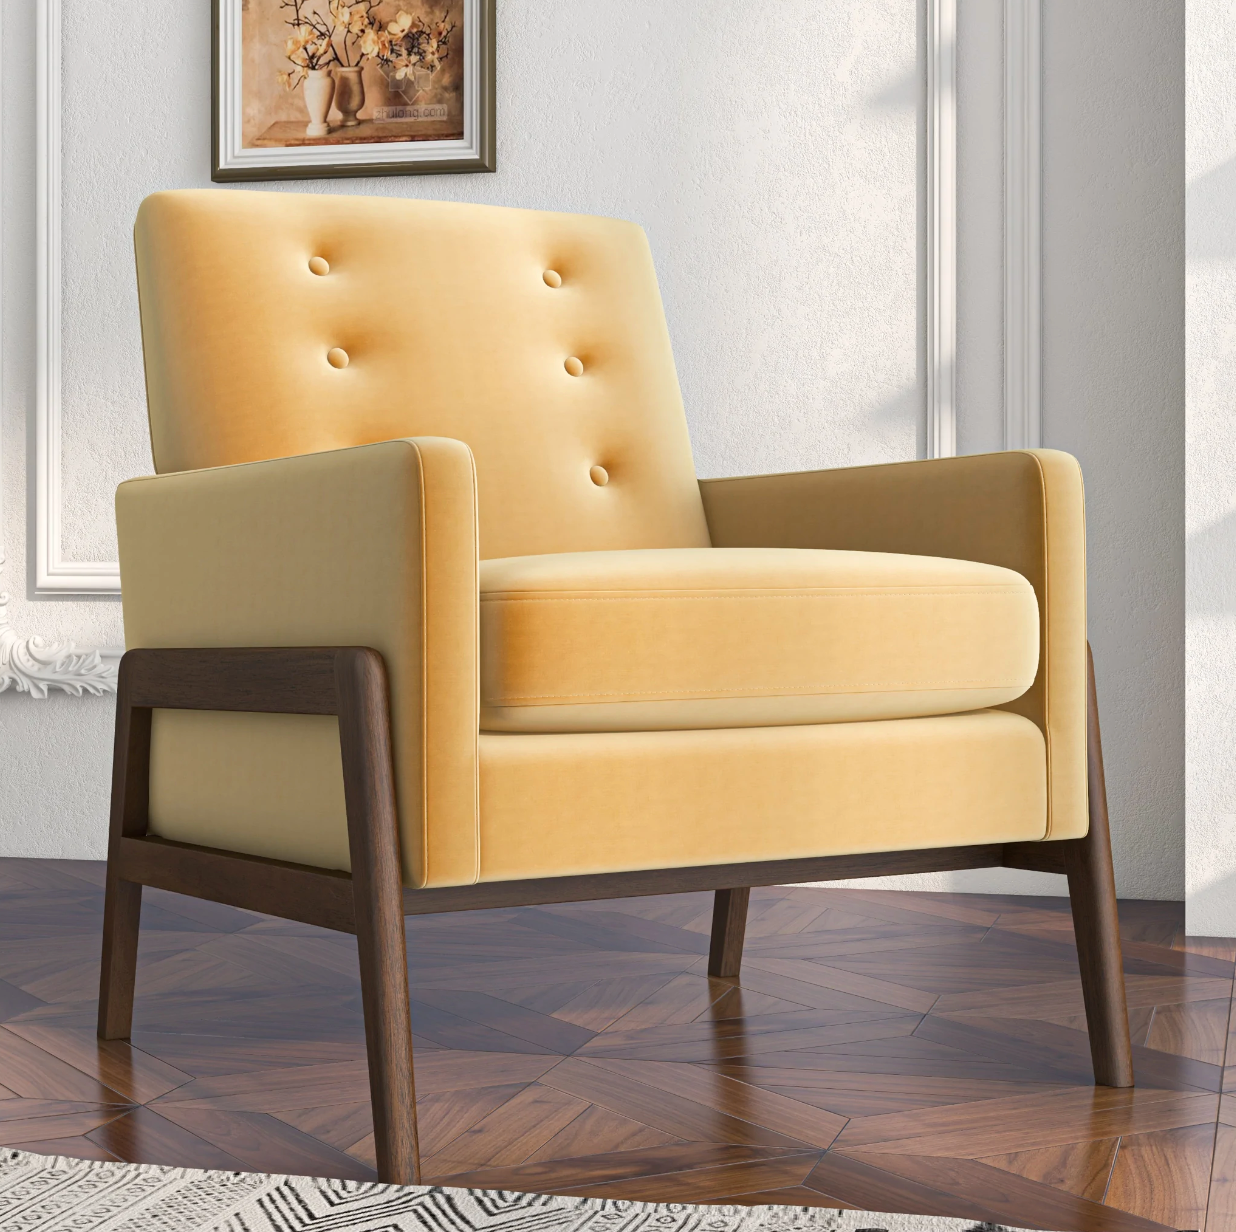 Mid-Century Modern Lounge Chair in Custard Yellow Velvet